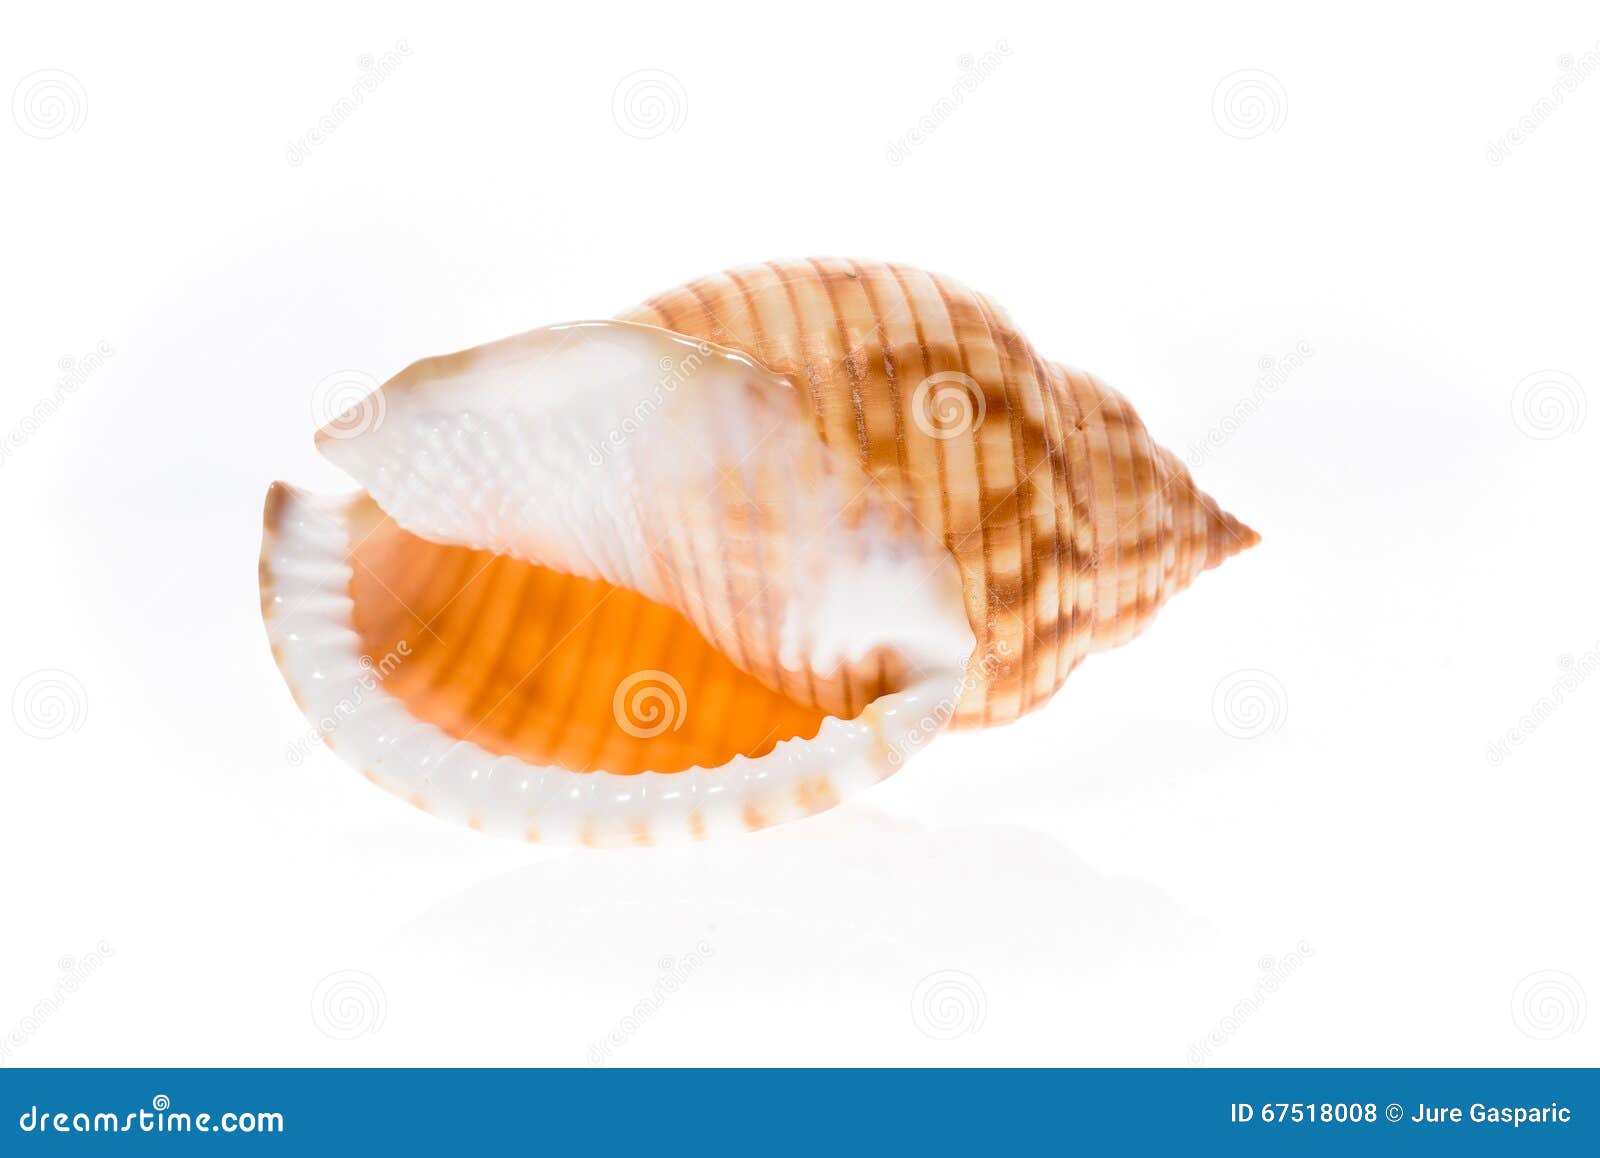 helmet sea shell - galeodea echinophora. empty house of sea snail